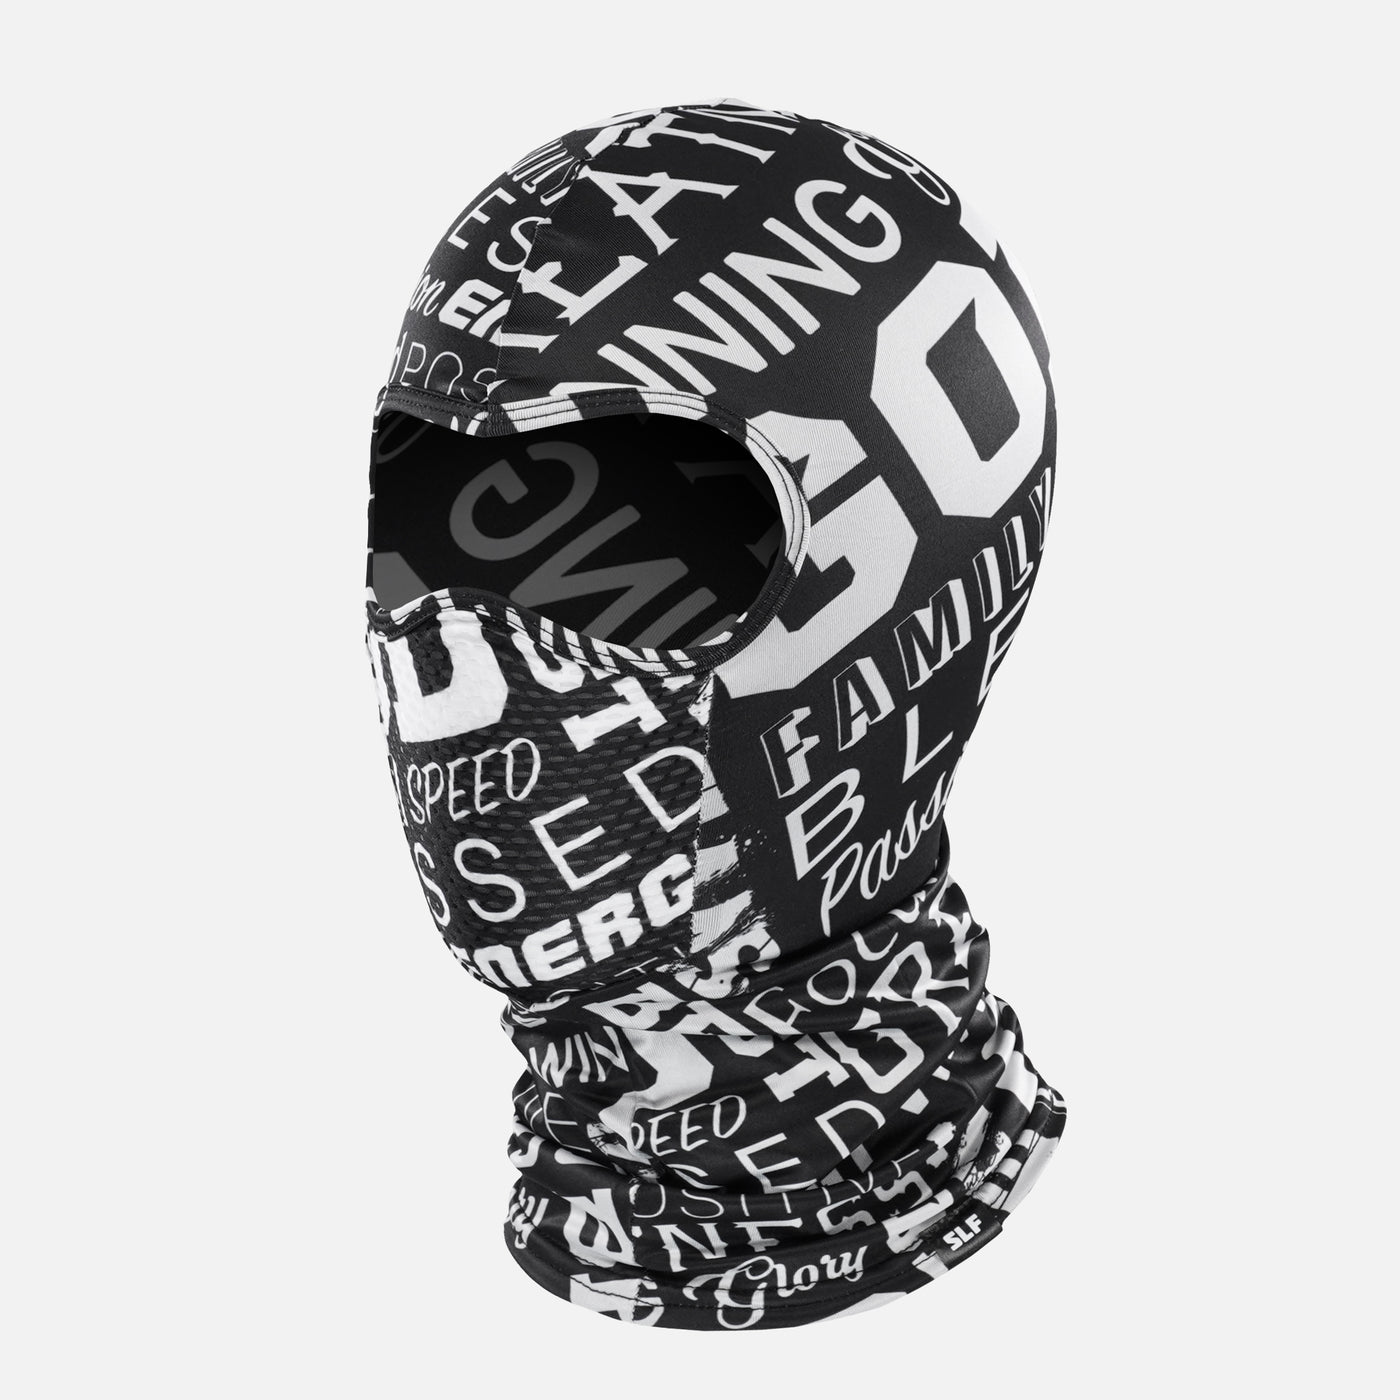 Inspirational Black Shiesty Mask